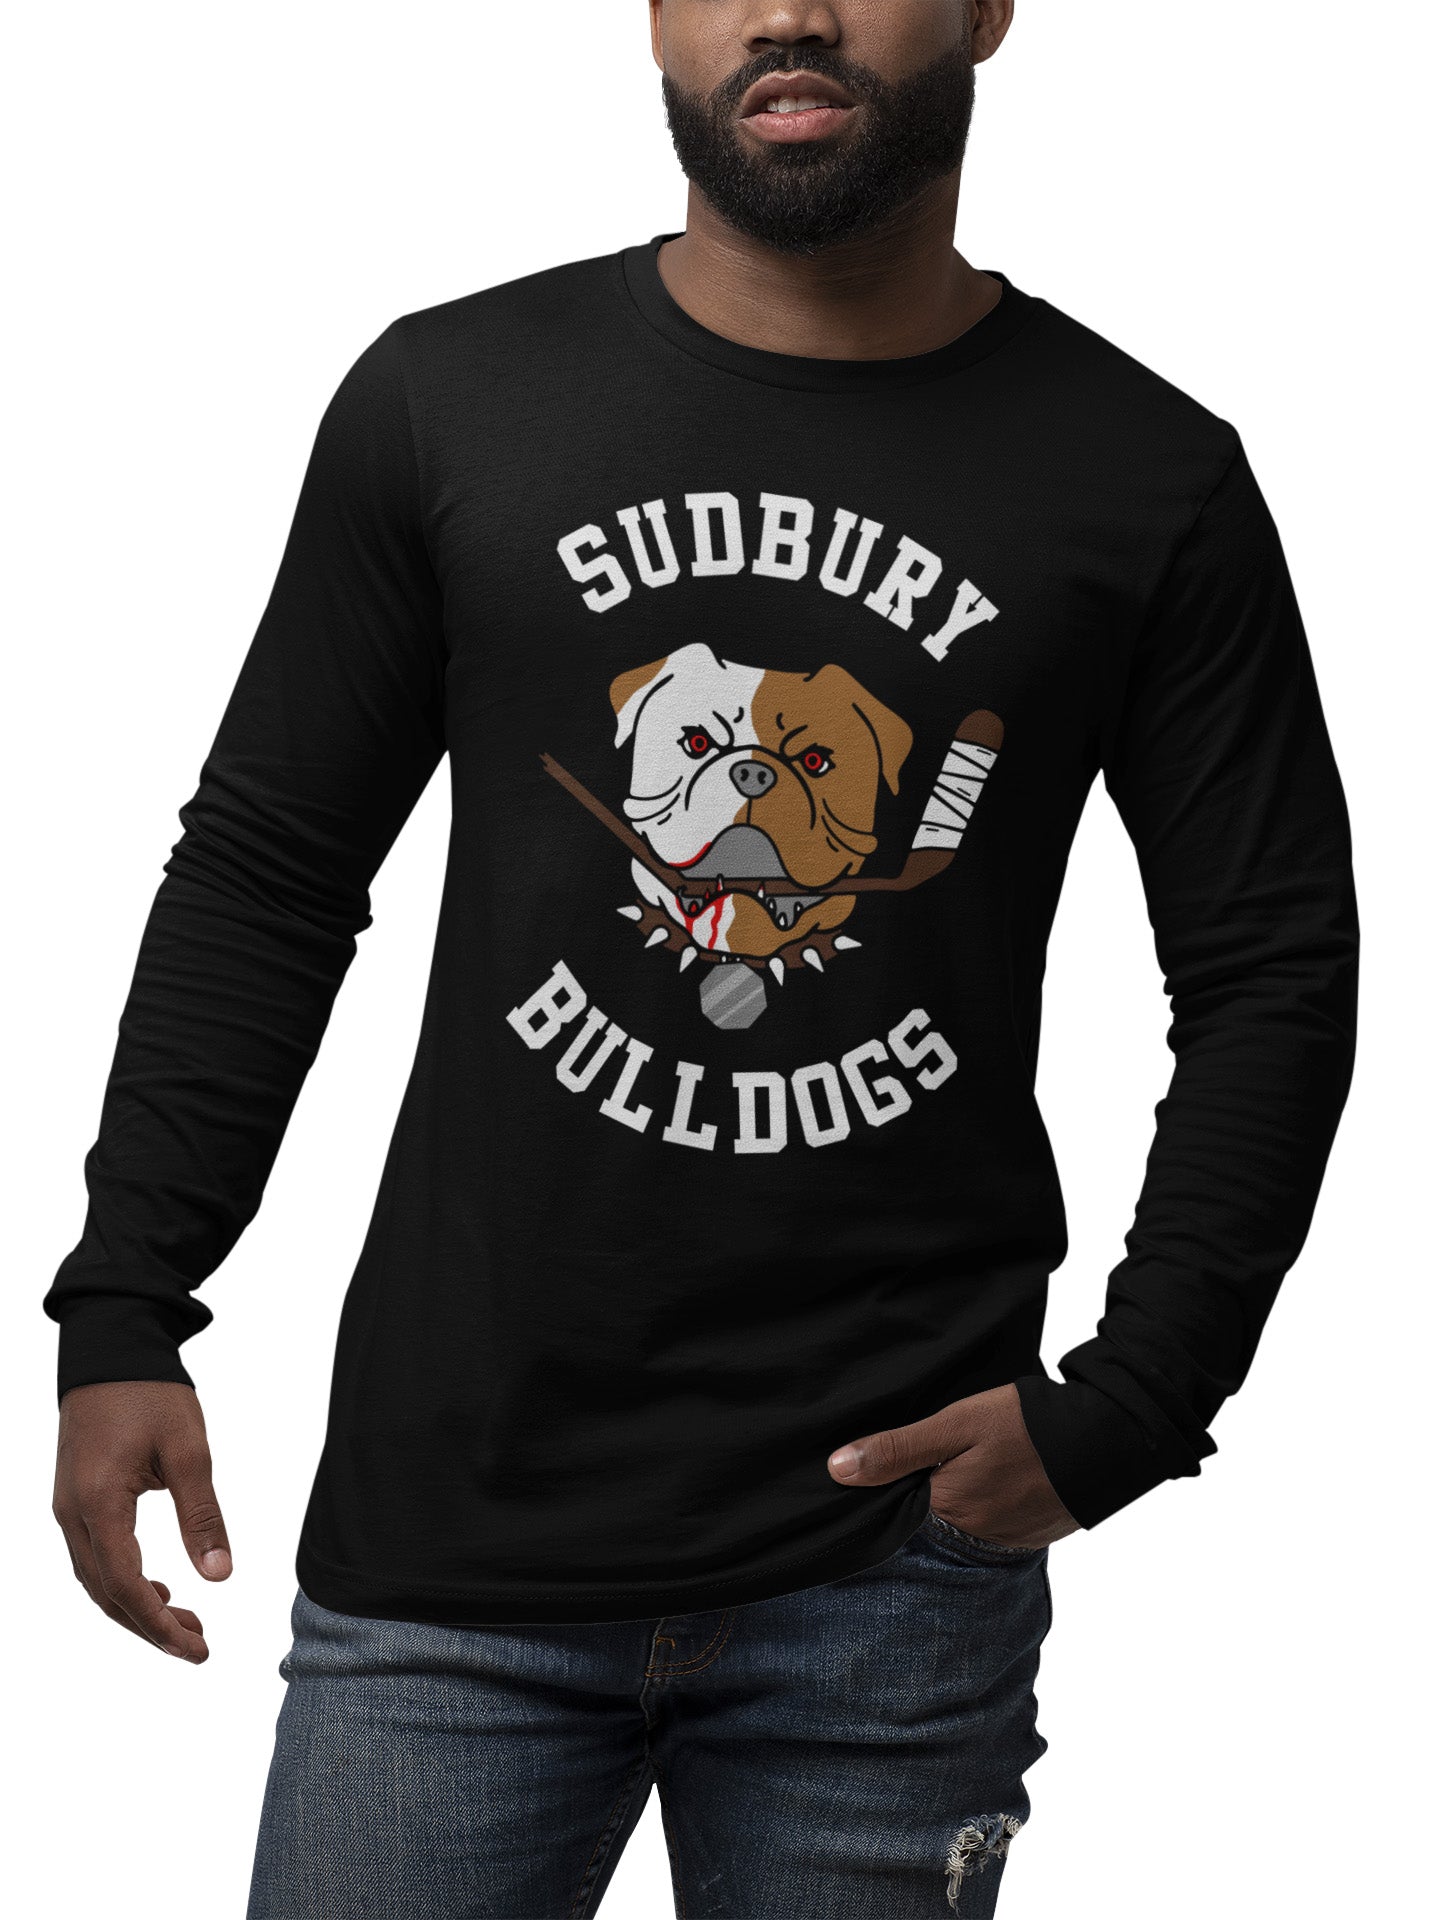 Absurd Ink Sudbury Bulldogs - Tank Top, Black / L